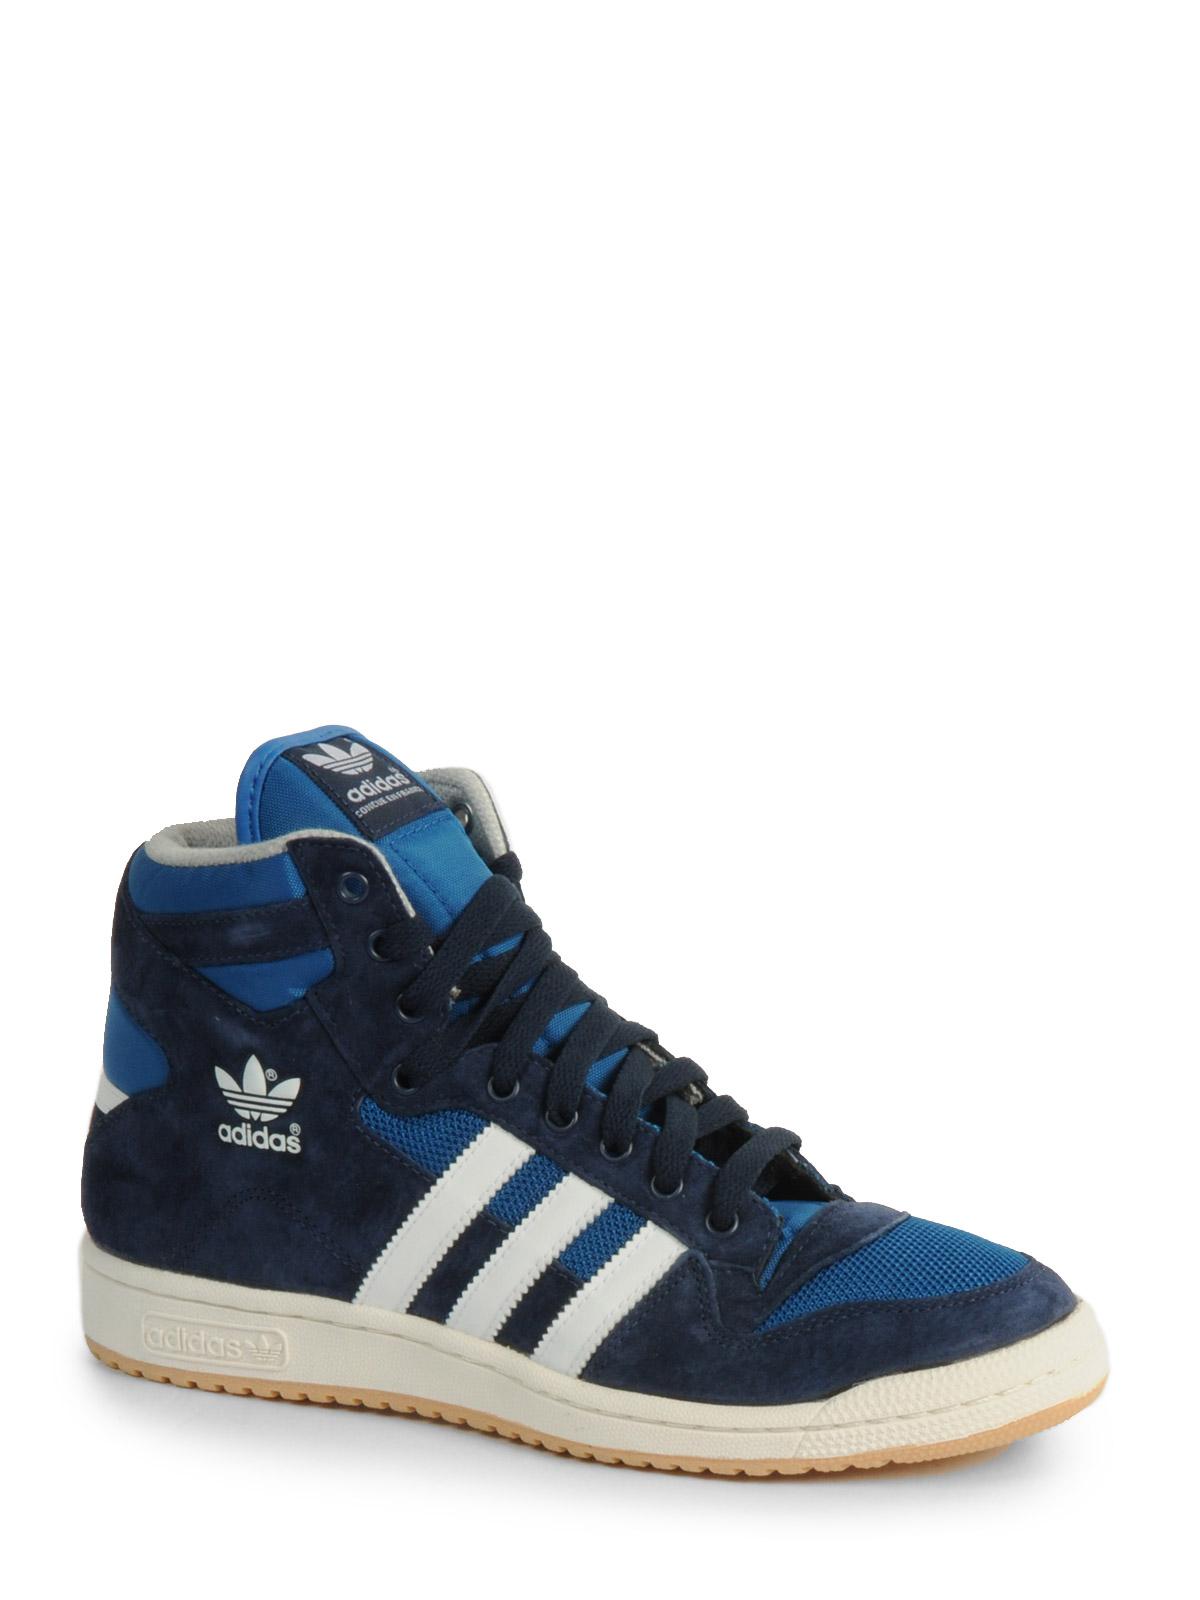 Foto Adidas Decade OG Mid zapatillas azul real/blanco/ blanco vap EU: 47 foto 226358